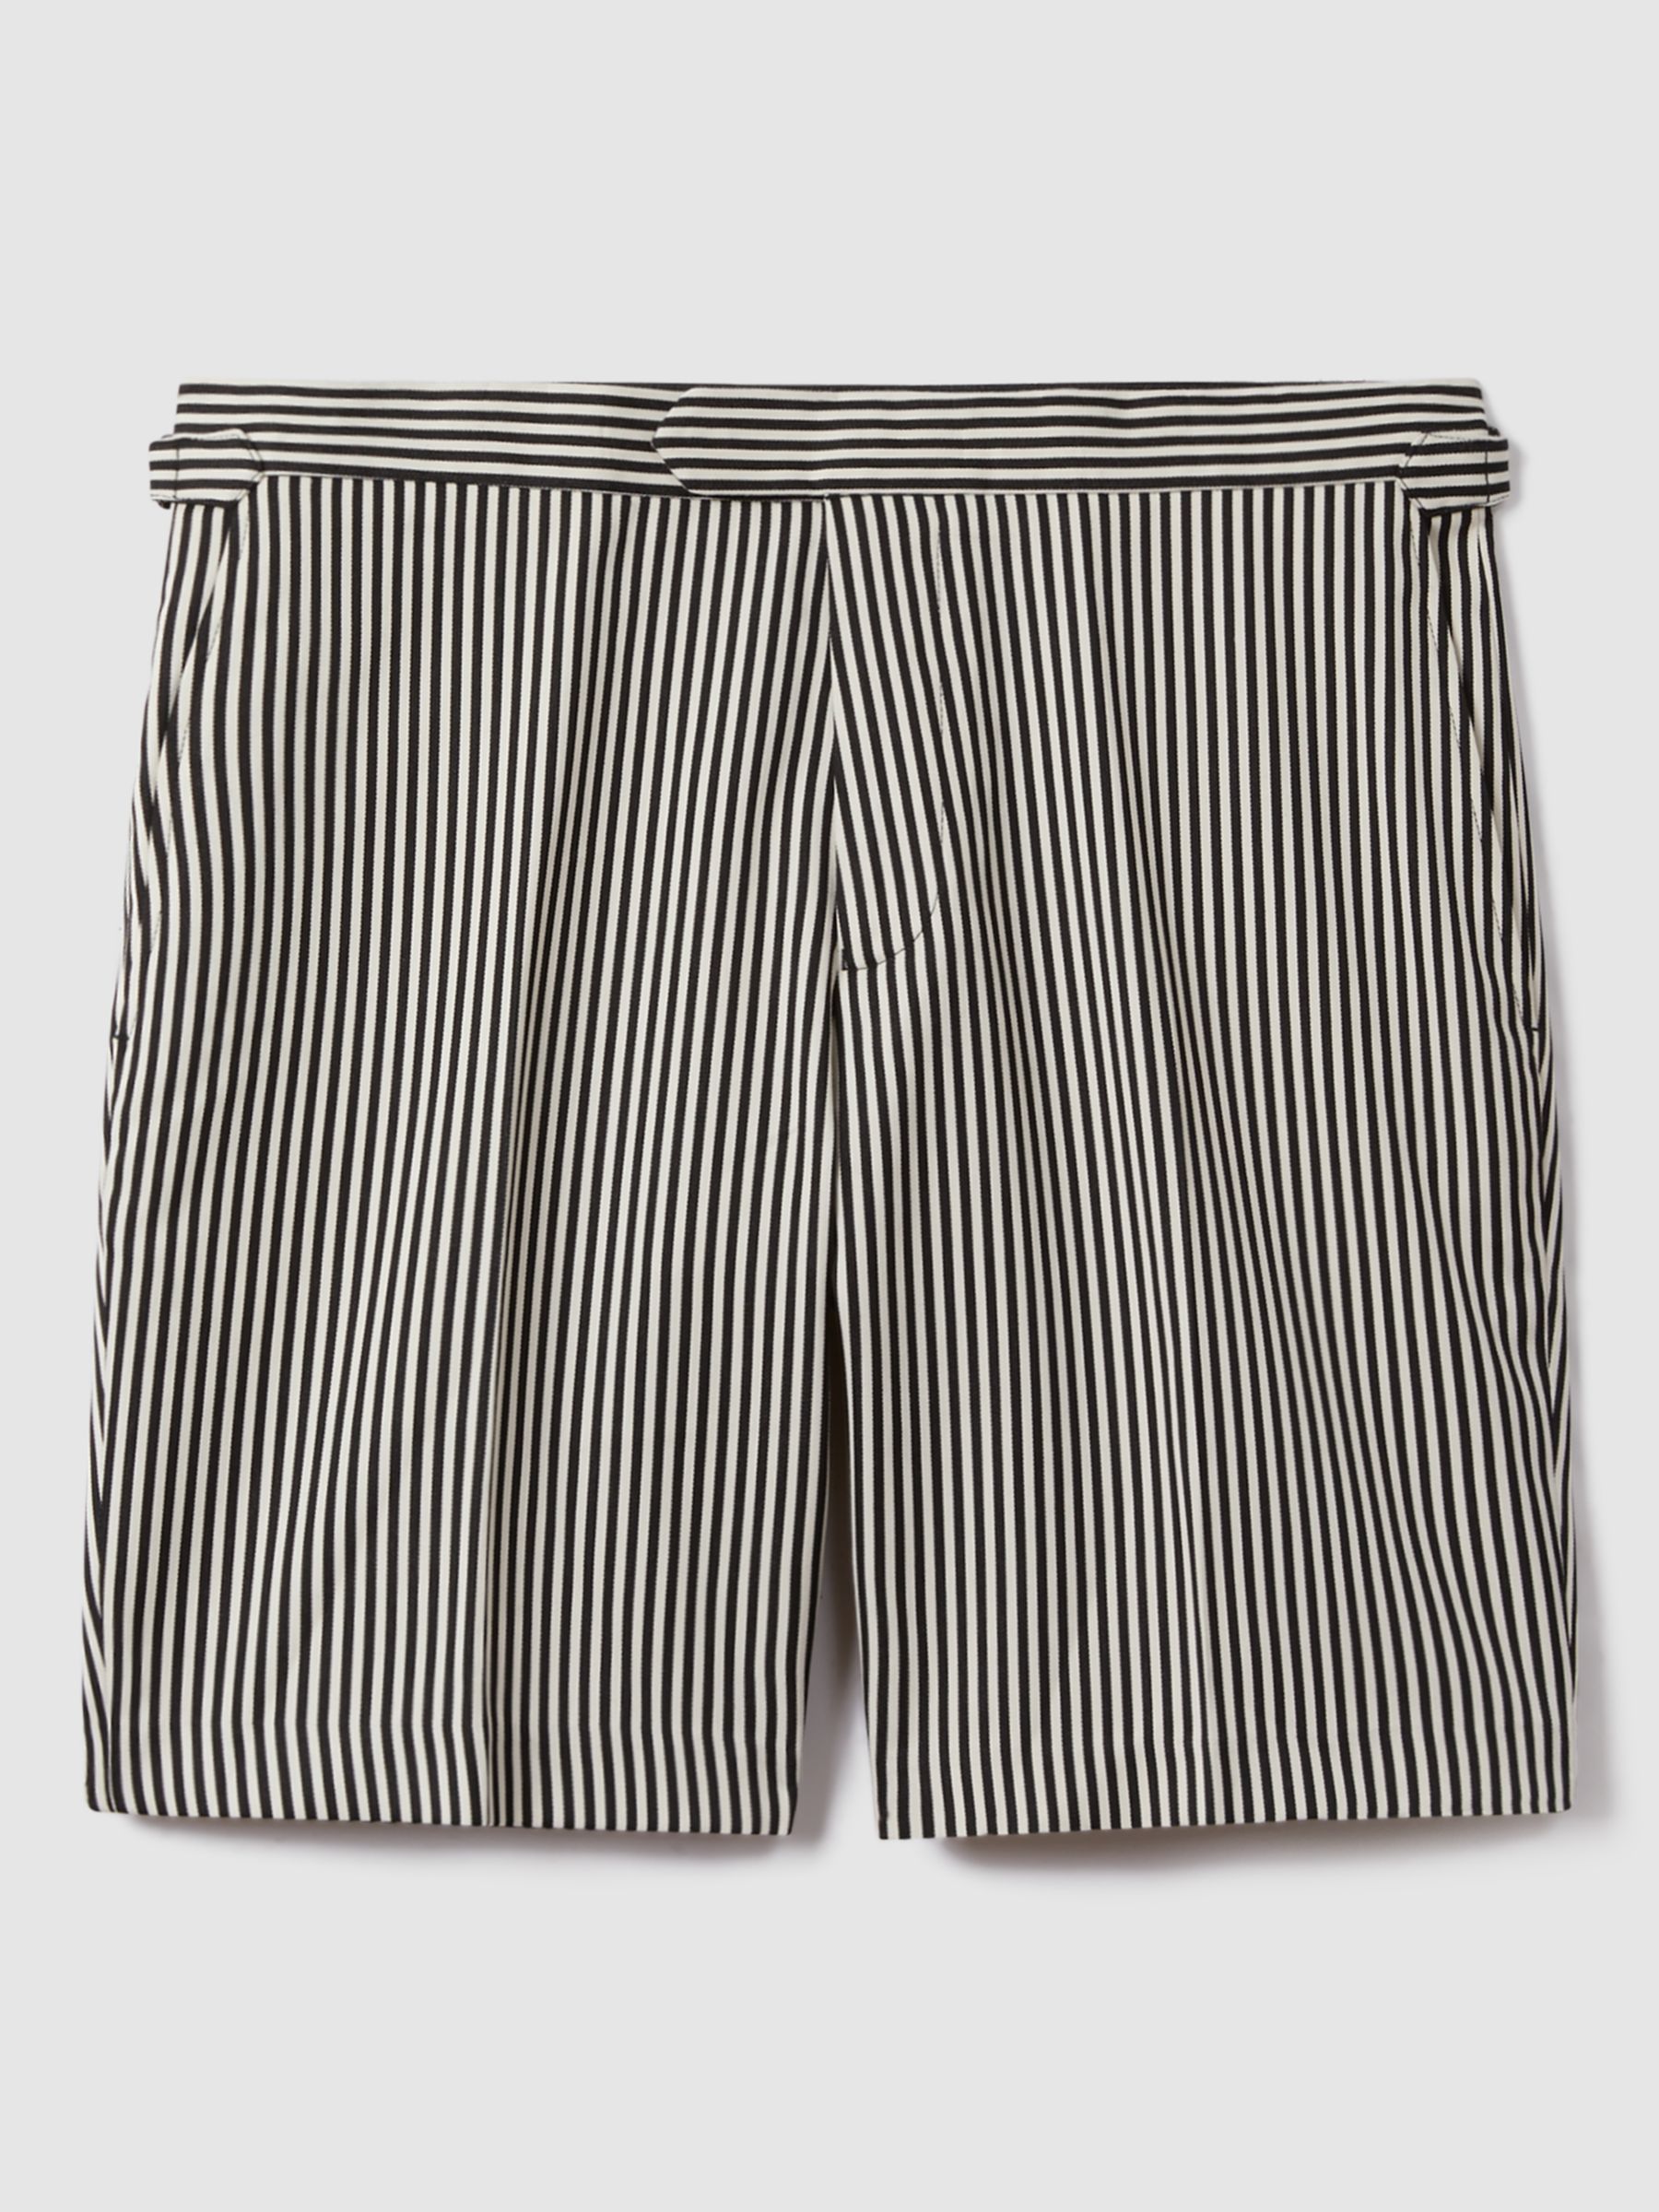 Reiss Stream Stripe Shorts, Black/White, 28R